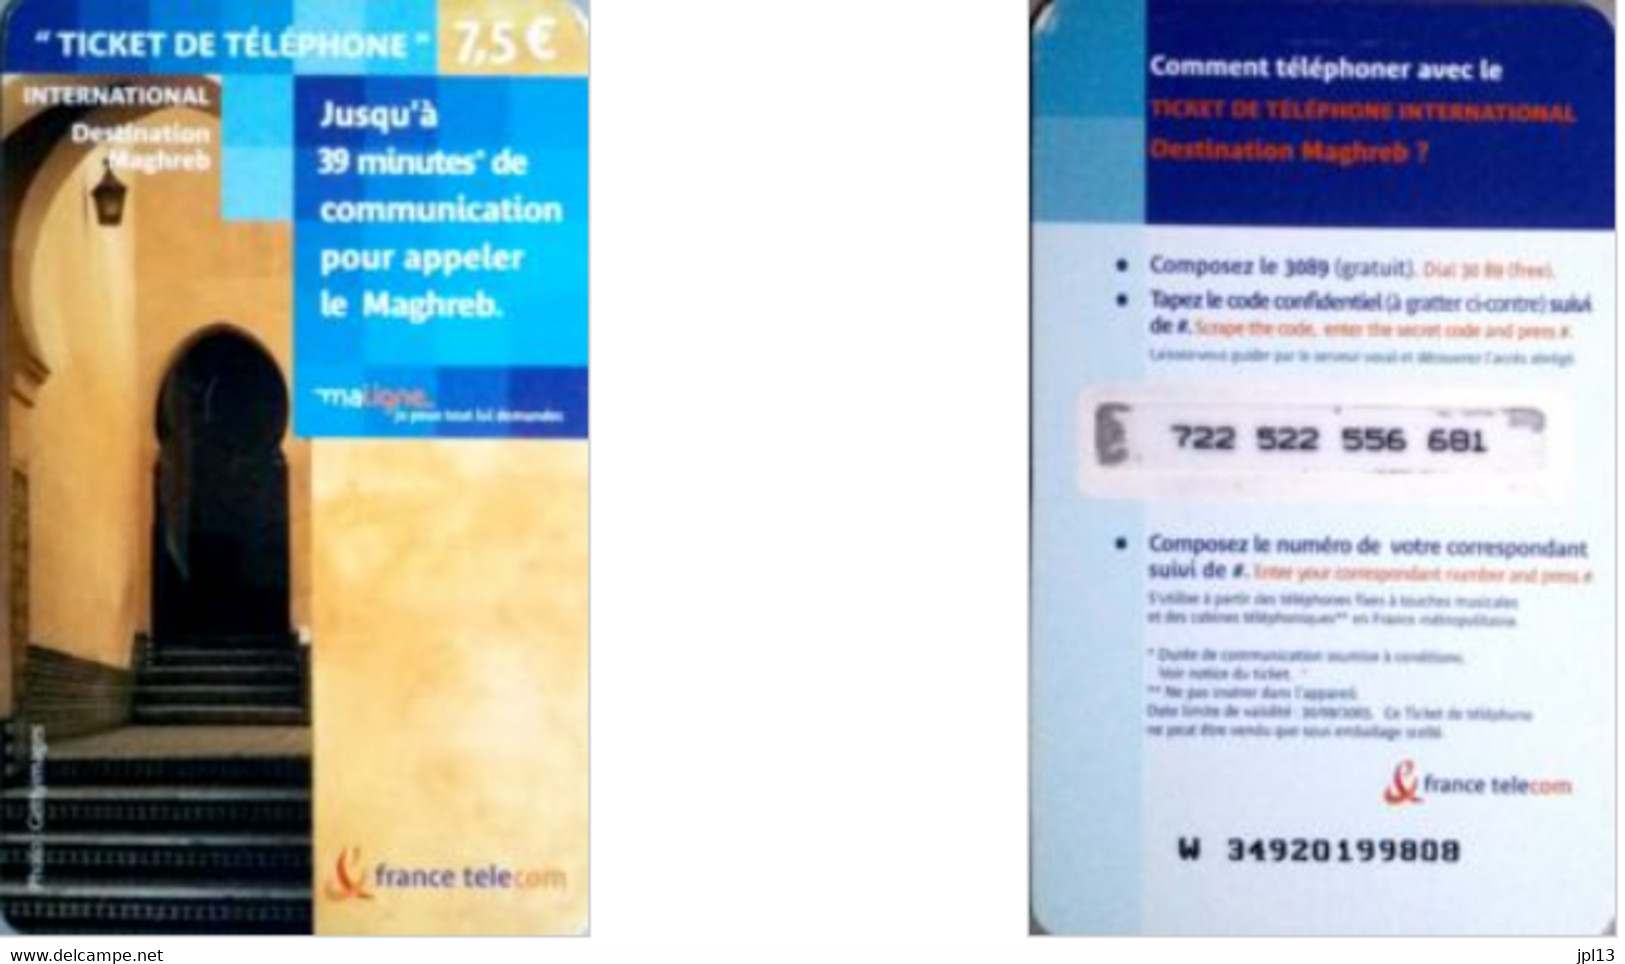 Ticket Téléphone - France - France Telecom - 7,5€ International Destination Maghreb, Série W 3492, Exp. 30/09/2005 - FT Tickets